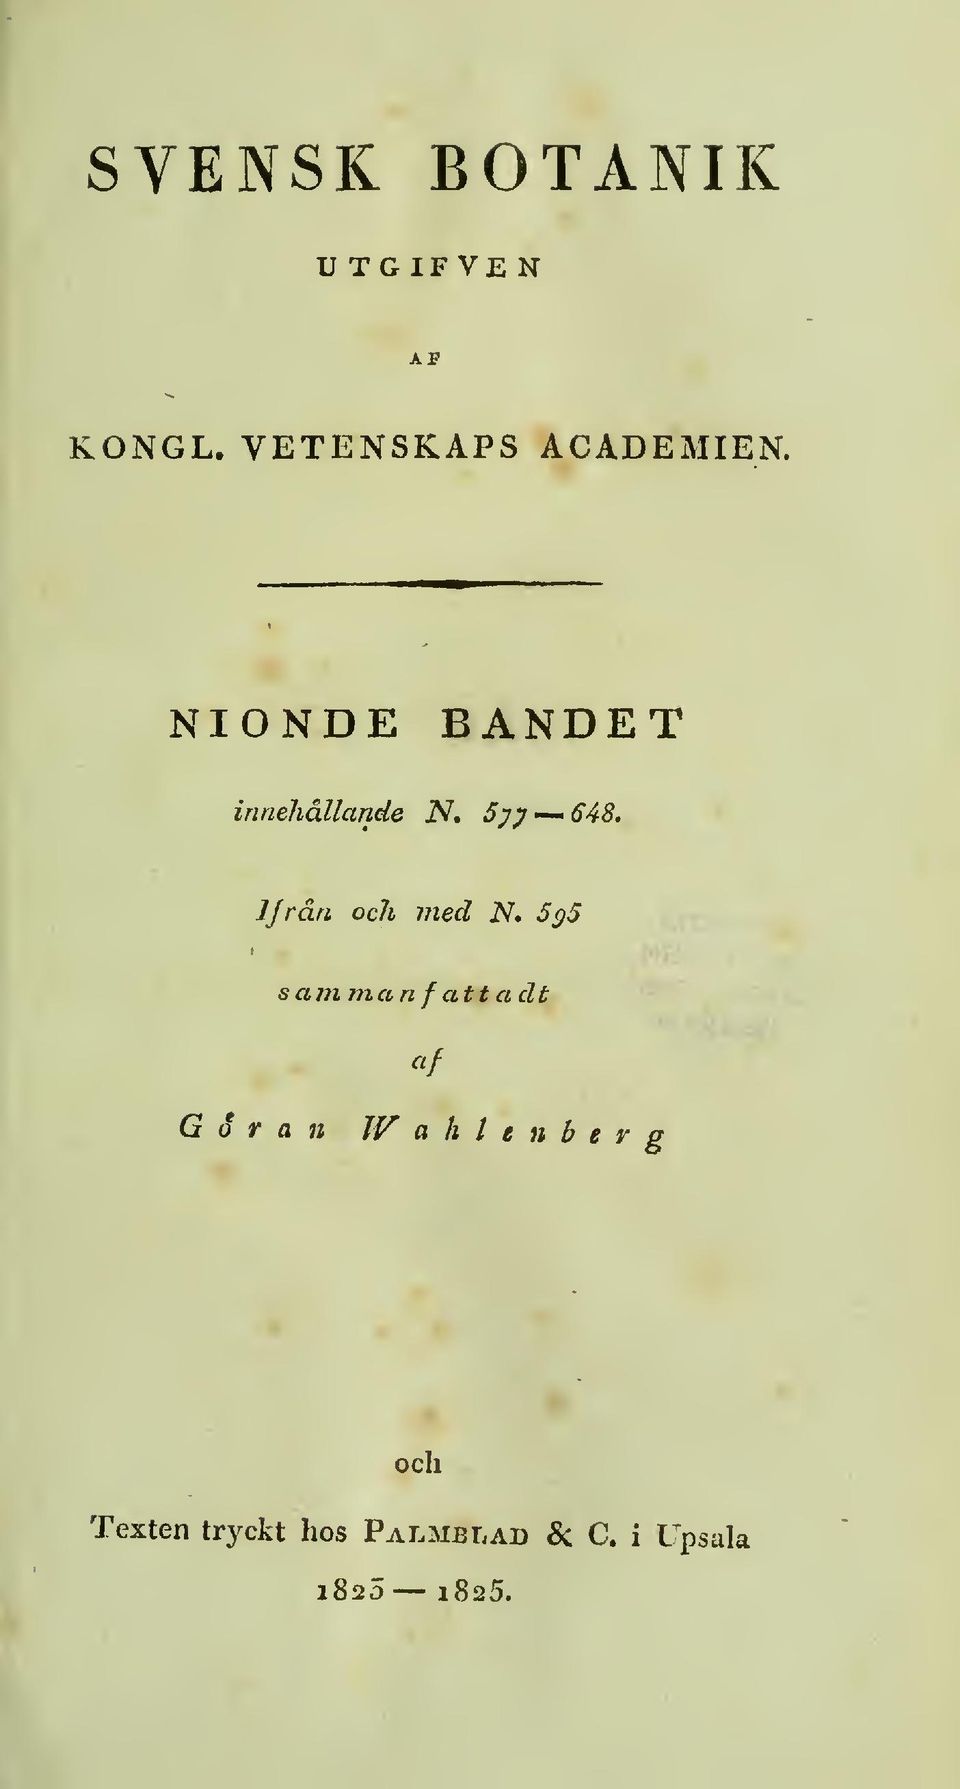 NIONDE BANDET innehållande N* 5;p--'648.